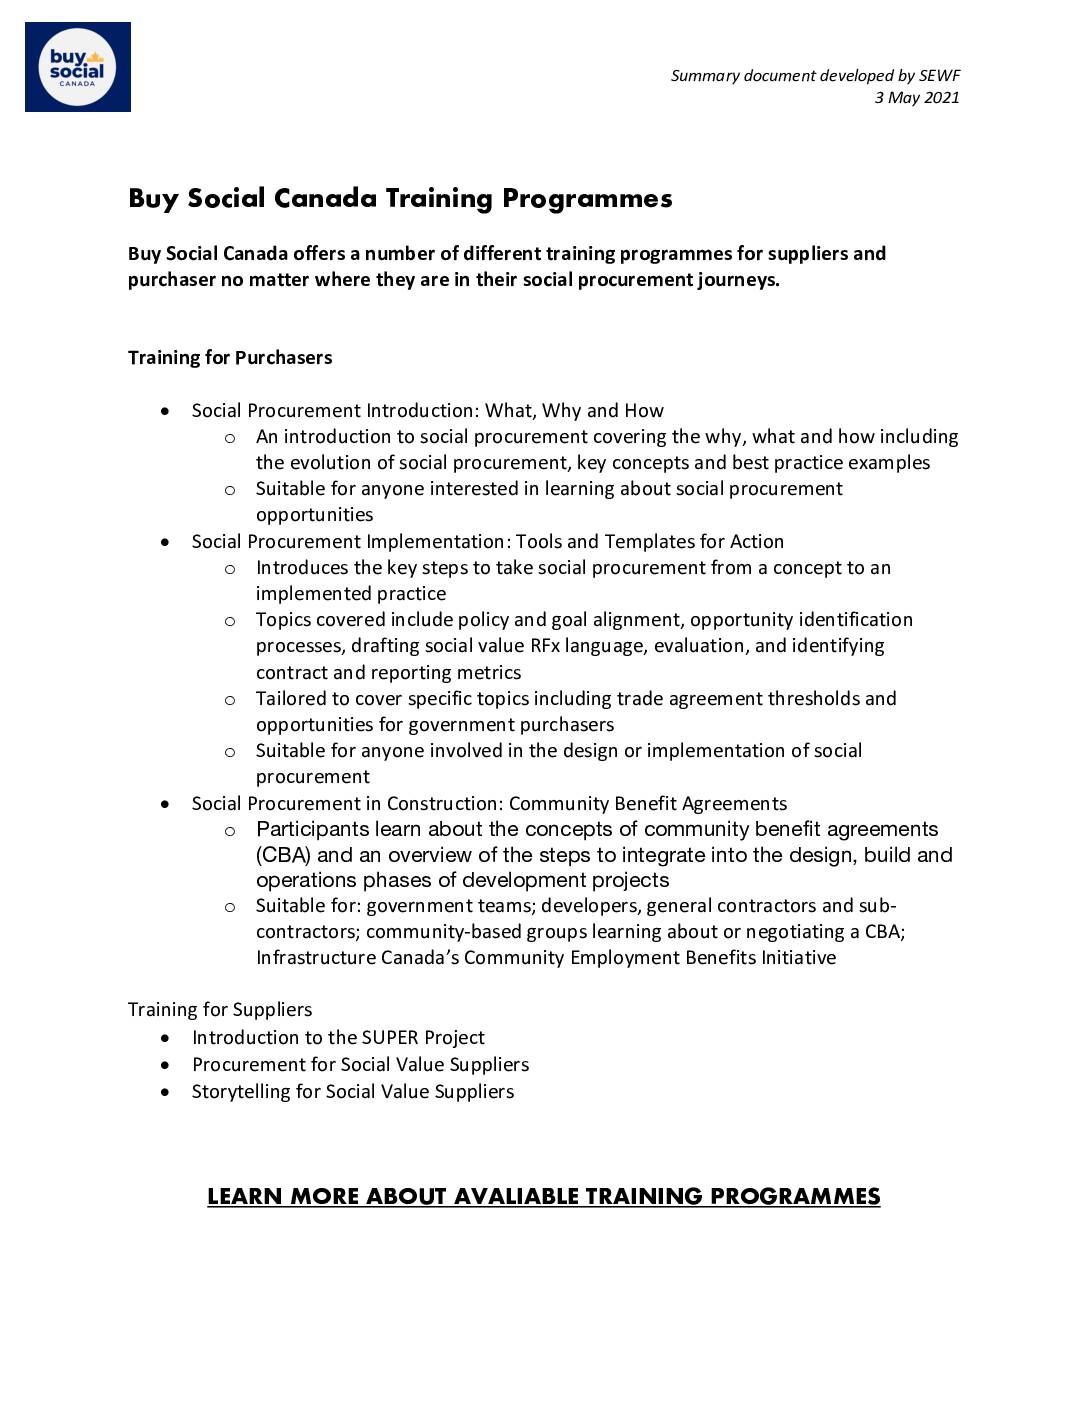 Buy Social Canada Trainings